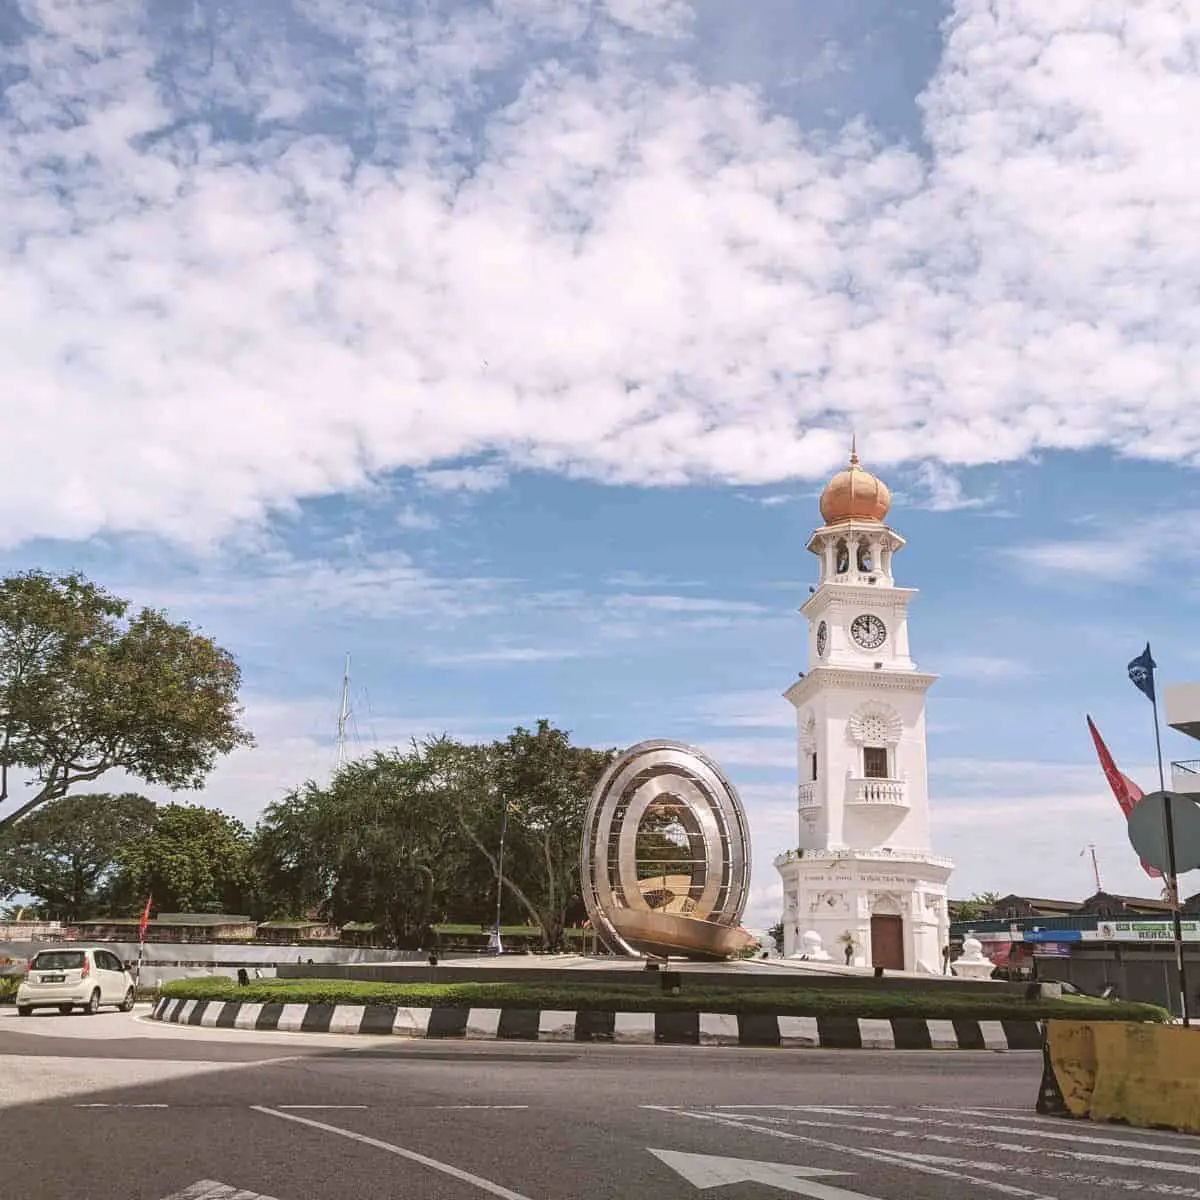 Singapore to Penang Queen Victoria Memorial Clock Tower